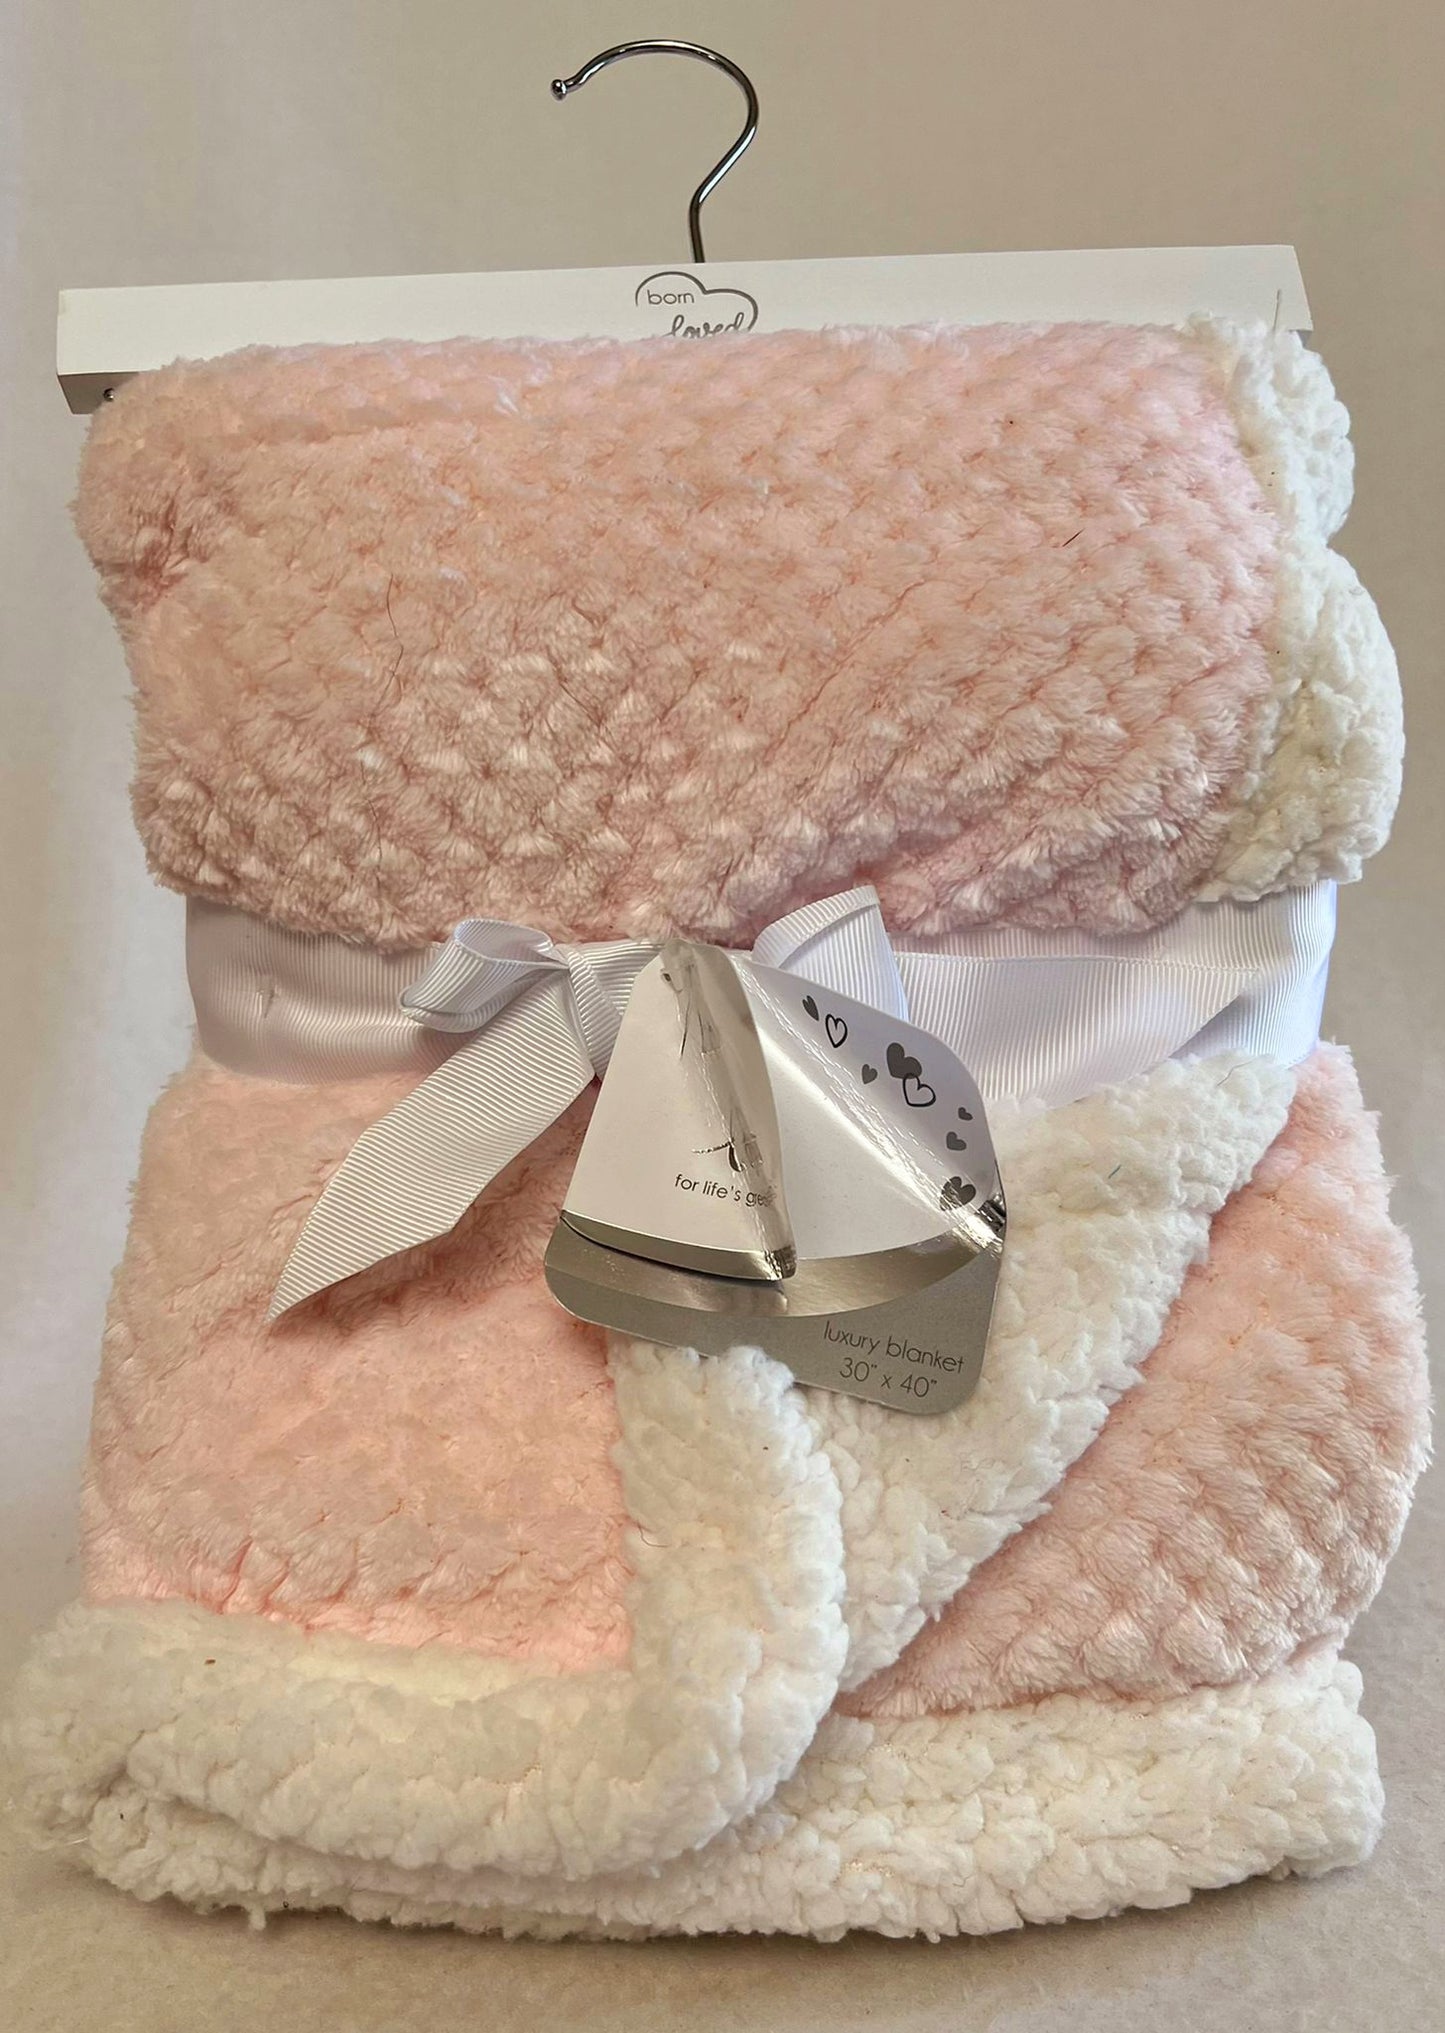 NIP *Pink "Born Loved" (Warm/Fluffy) Baby Blanket 30"x40"